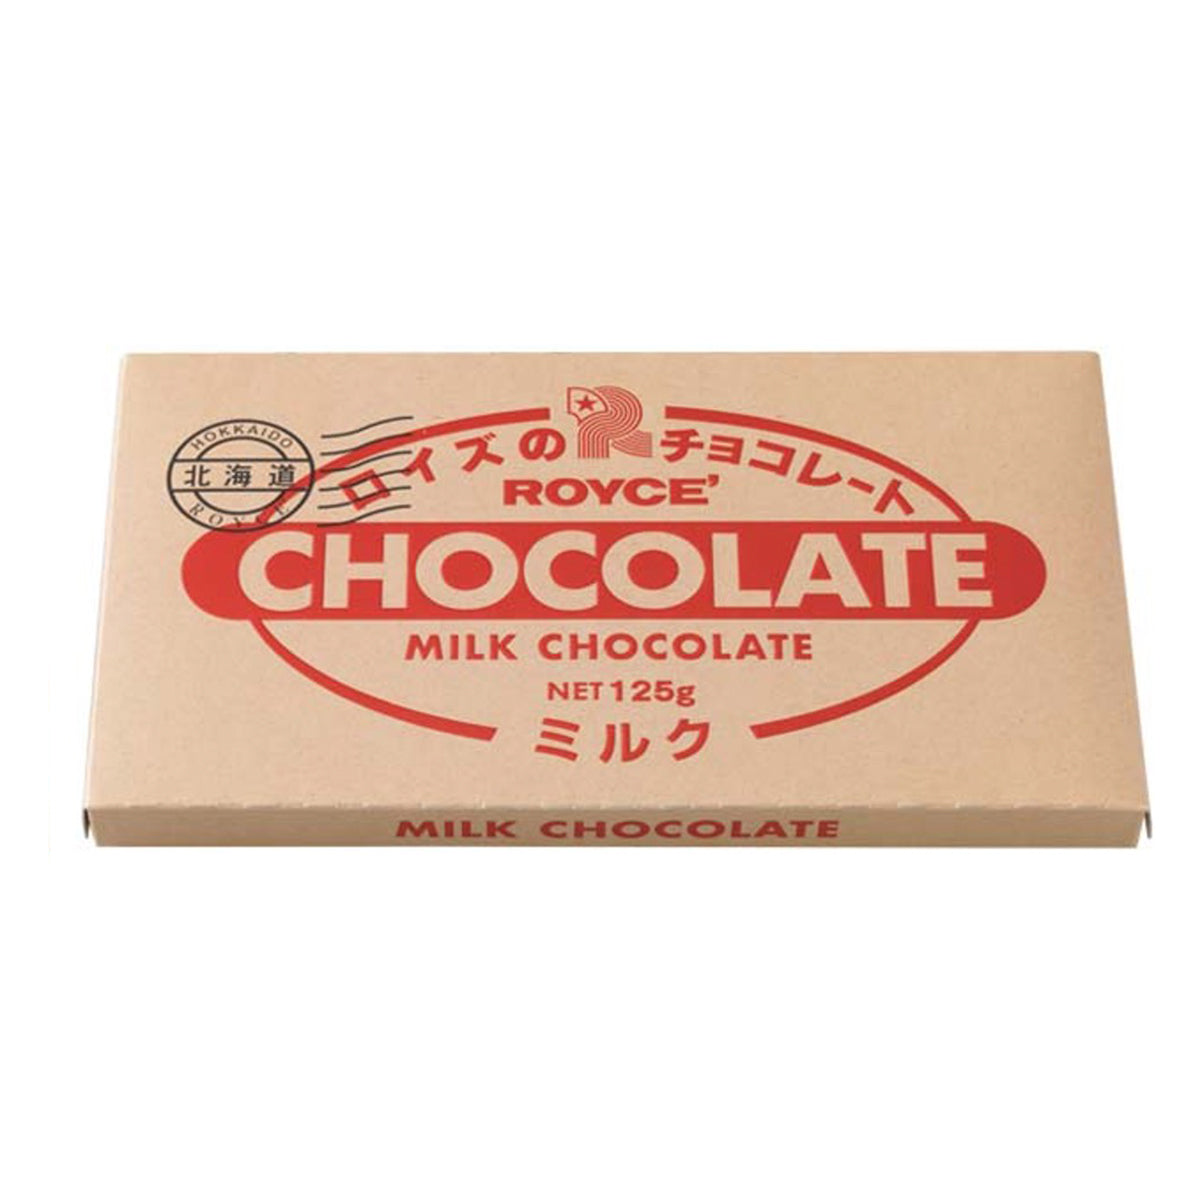 ROYCE' Chocolate - Chocolate Bar "Milk" - Image shows a chocolate carton. Text in black says Hokkaido ROYCE'. Text in red says ROYCE' Chocolate Milk Chocolate Net 125g. Text on bottom part says Milk Chocolate.